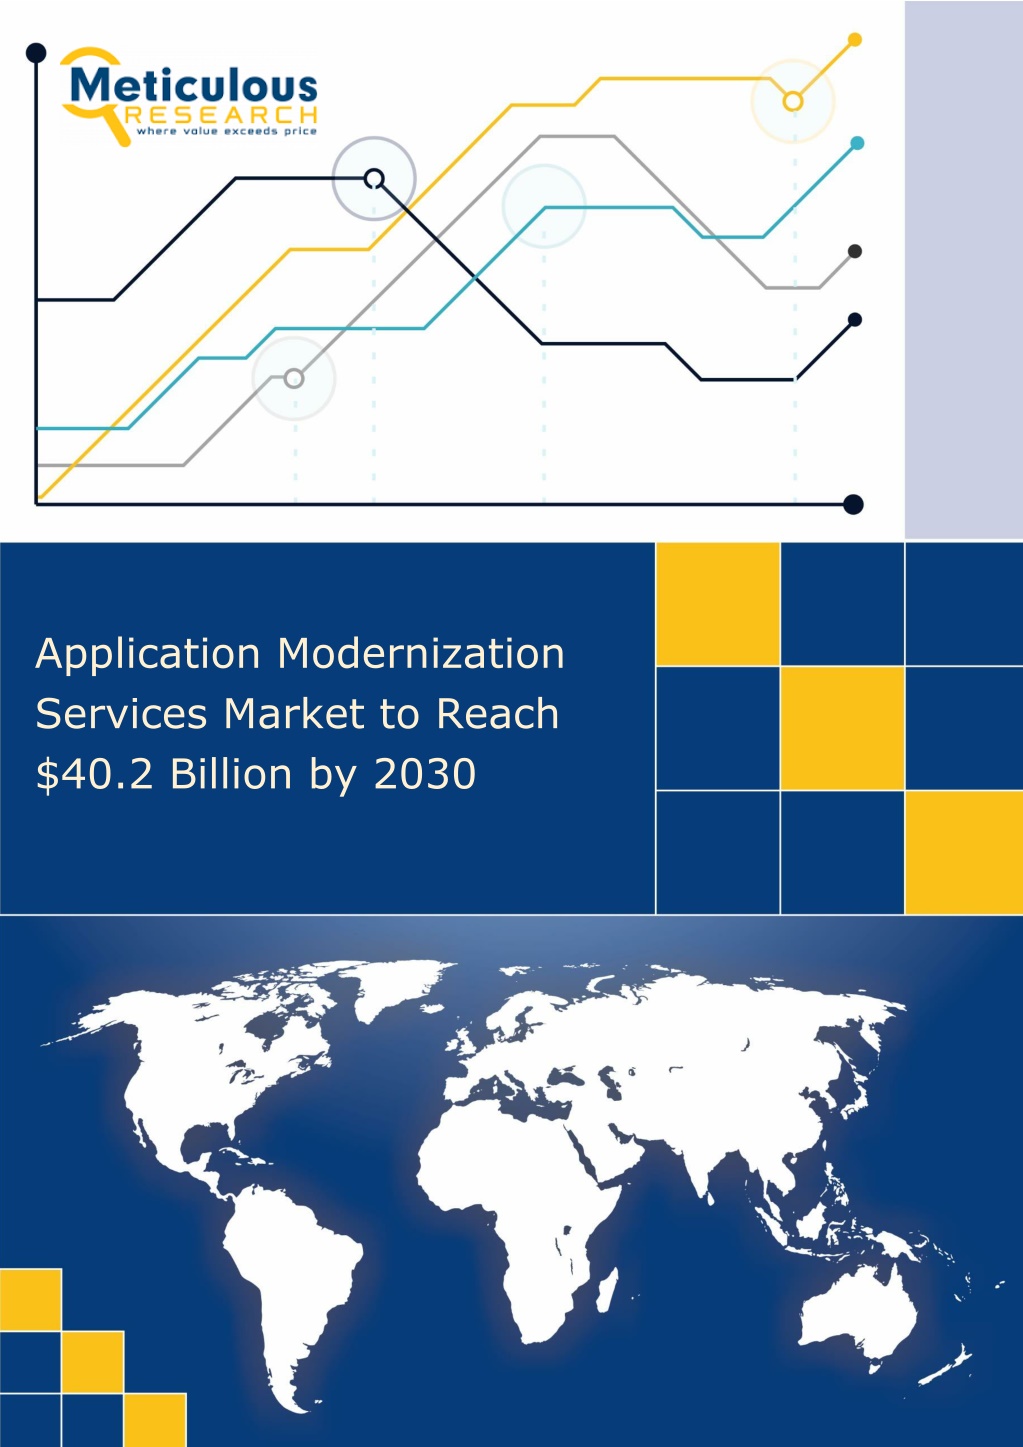 application modernization services market l.w